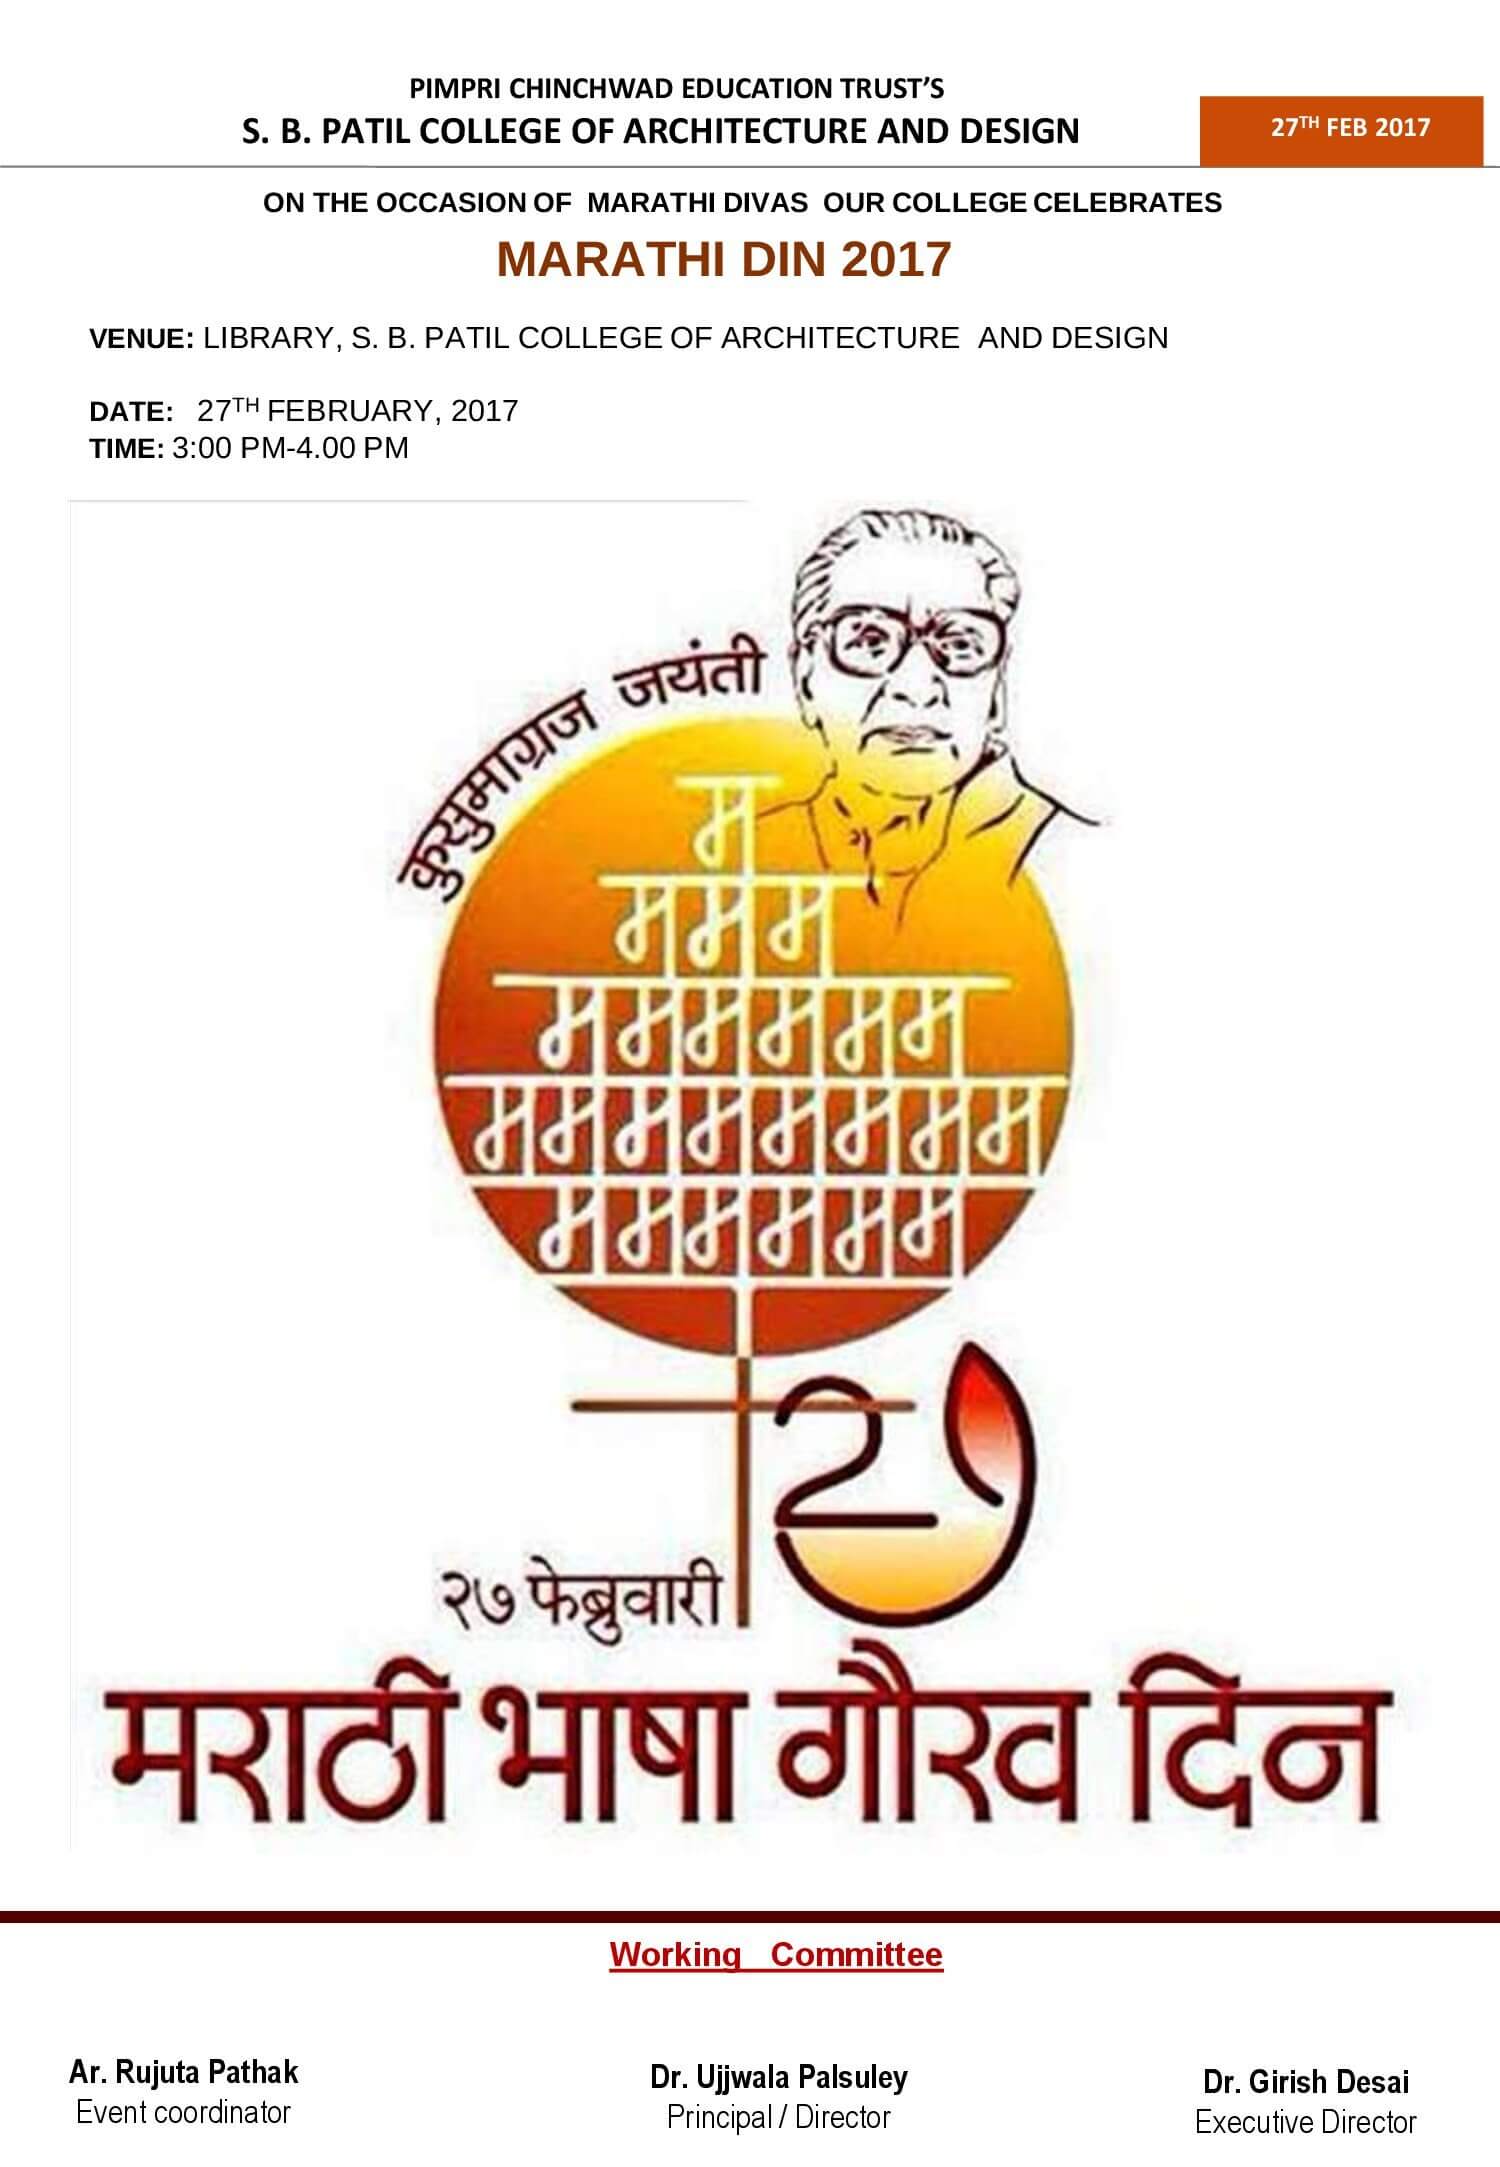 Marathi Din 2017, SBPCOAD